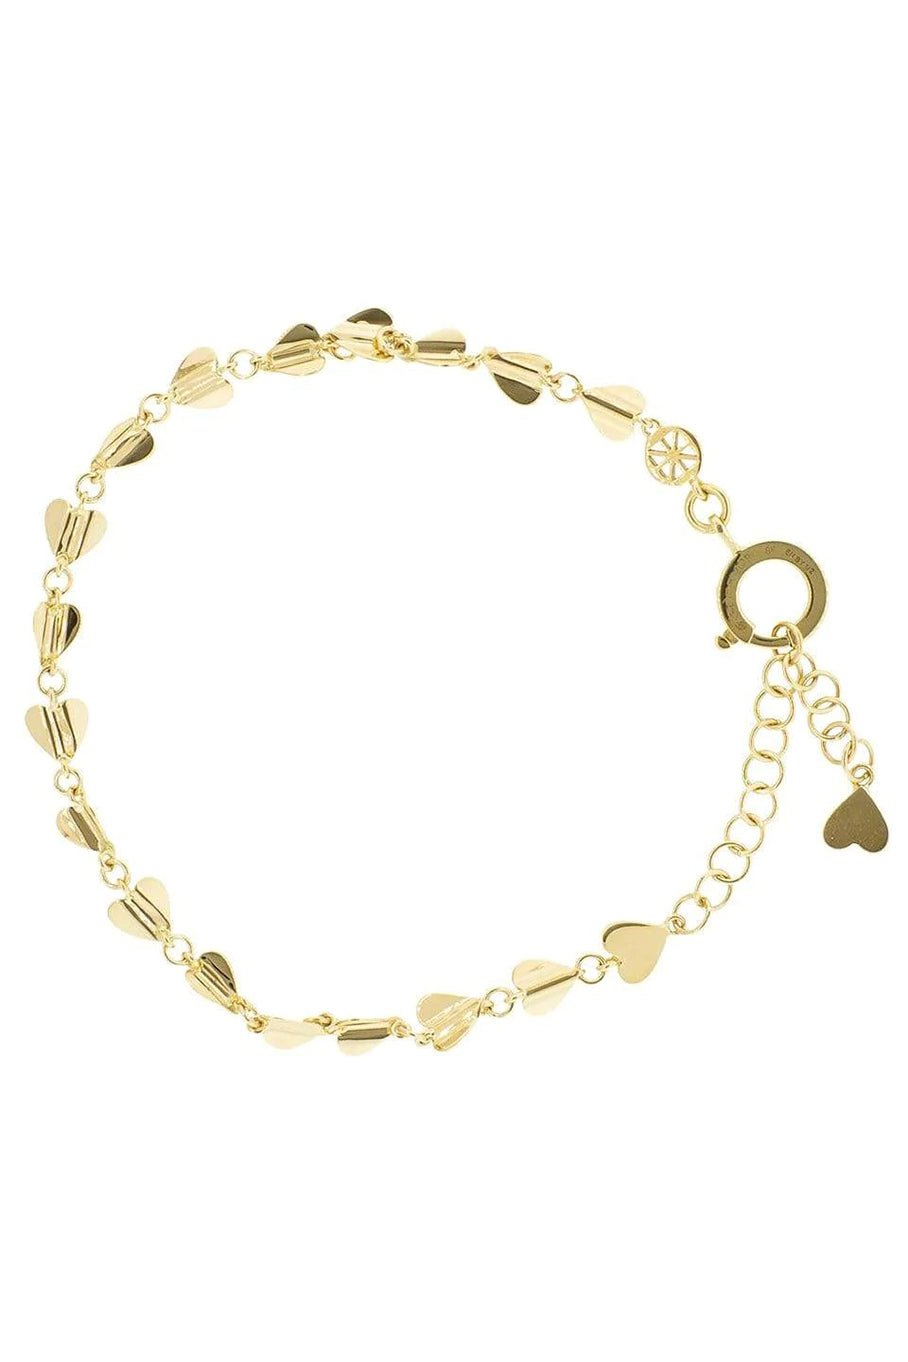 CADAR-Small Hearts Bracelet-YELLOW GOLD